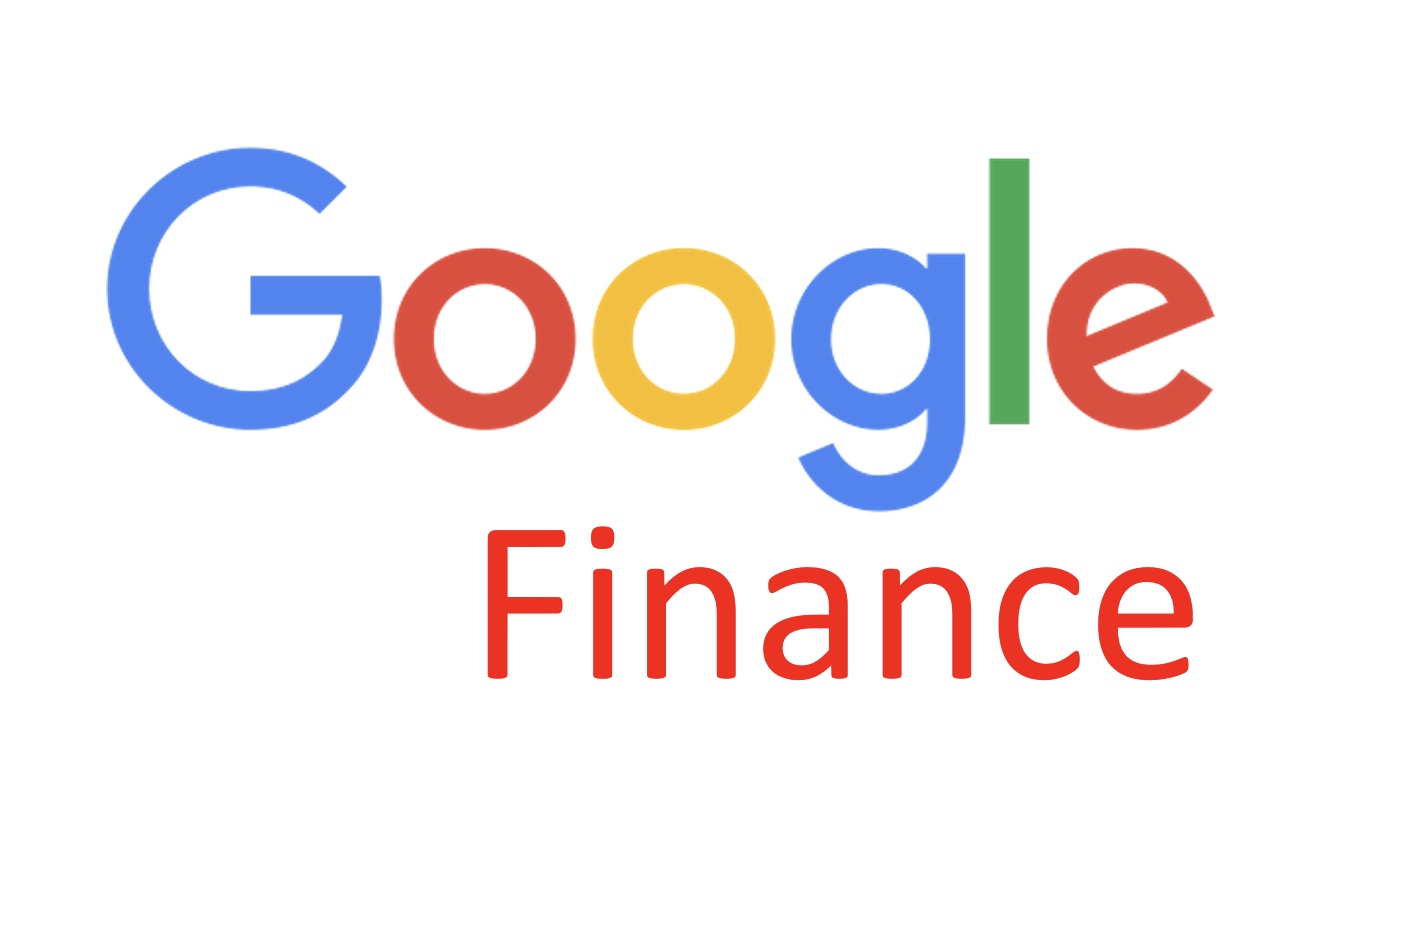 siri and google finances